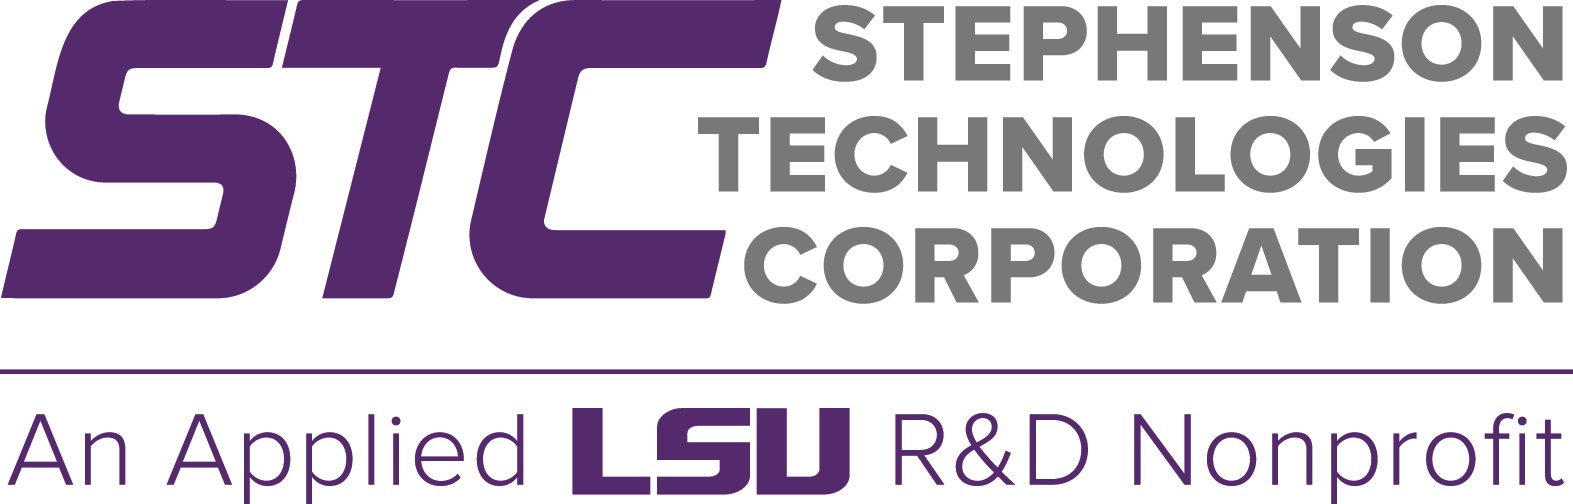 Stephenson Technologies Corporation